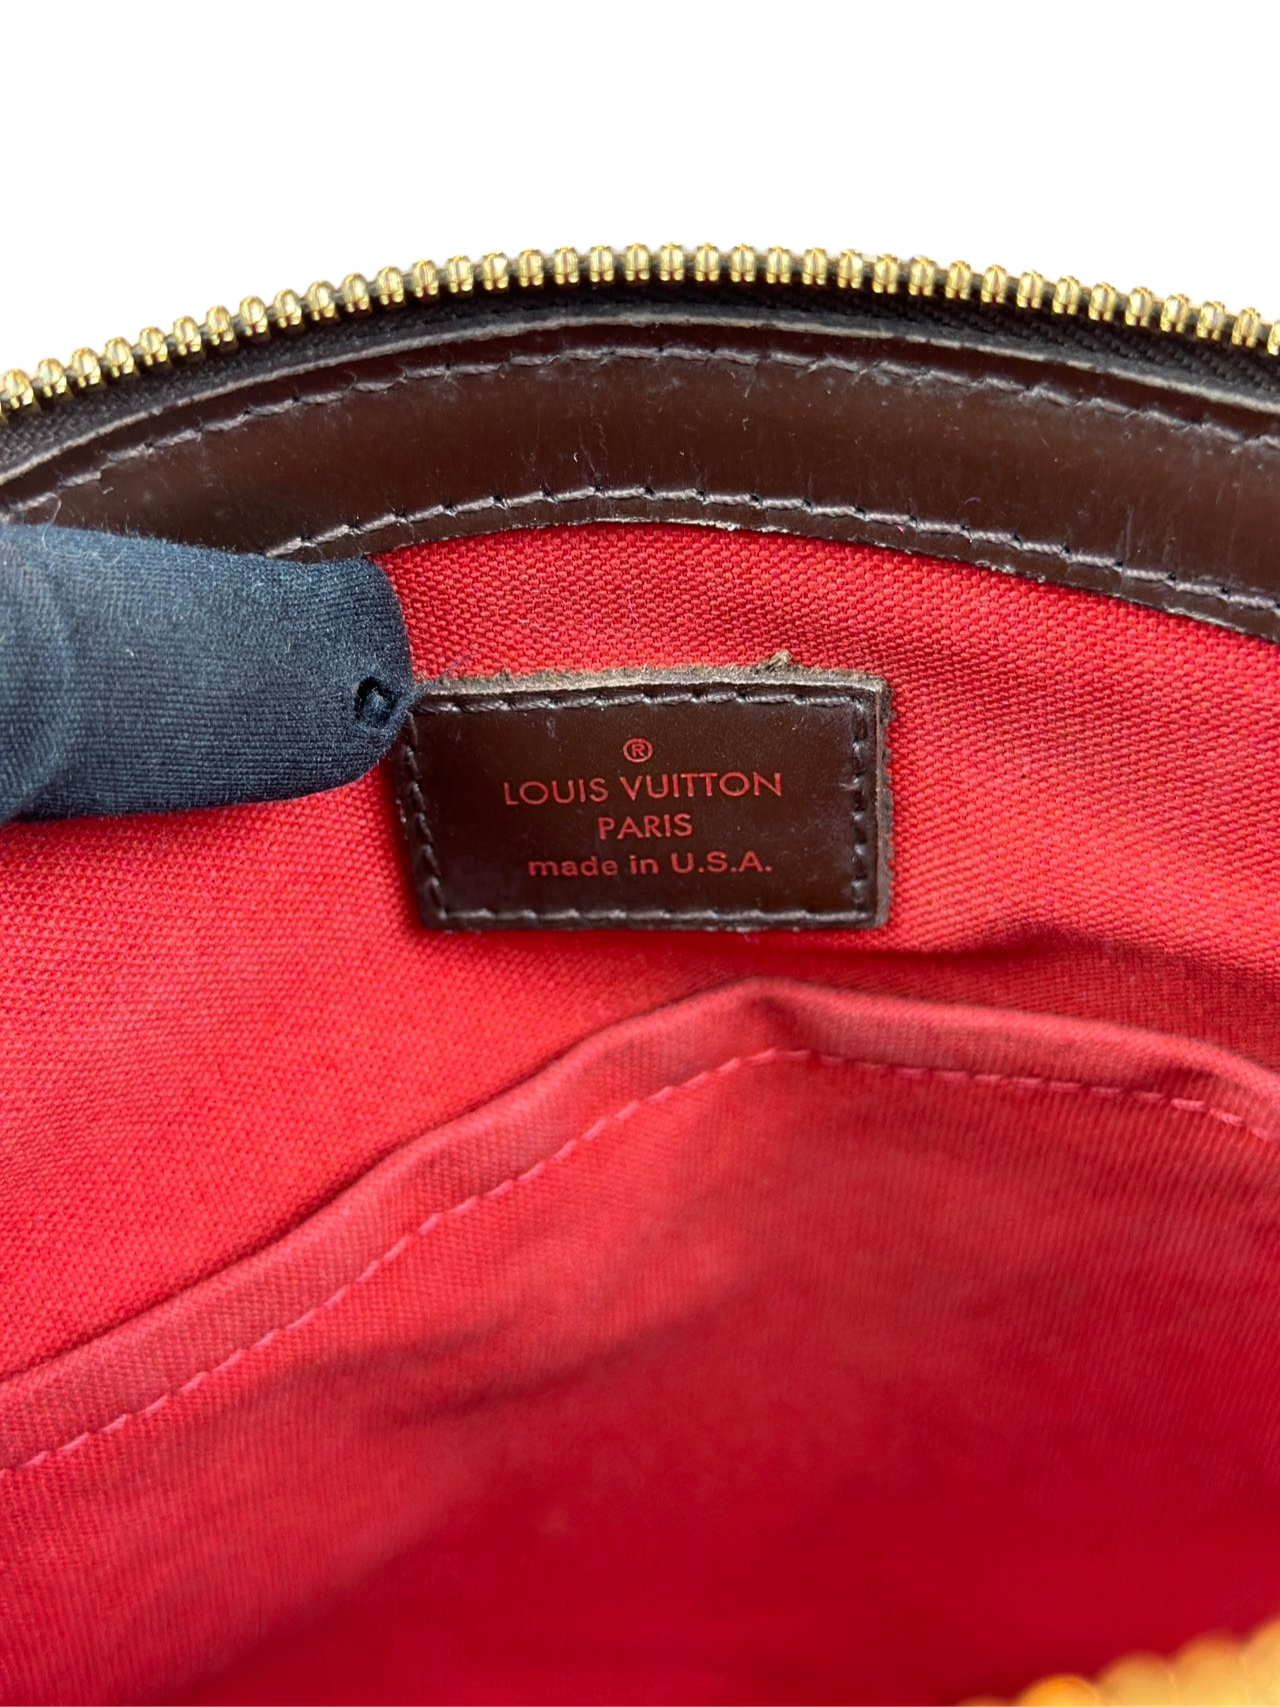 Preloved Louis Vuitton Damier Ebene Verona PM Satchel Handbag